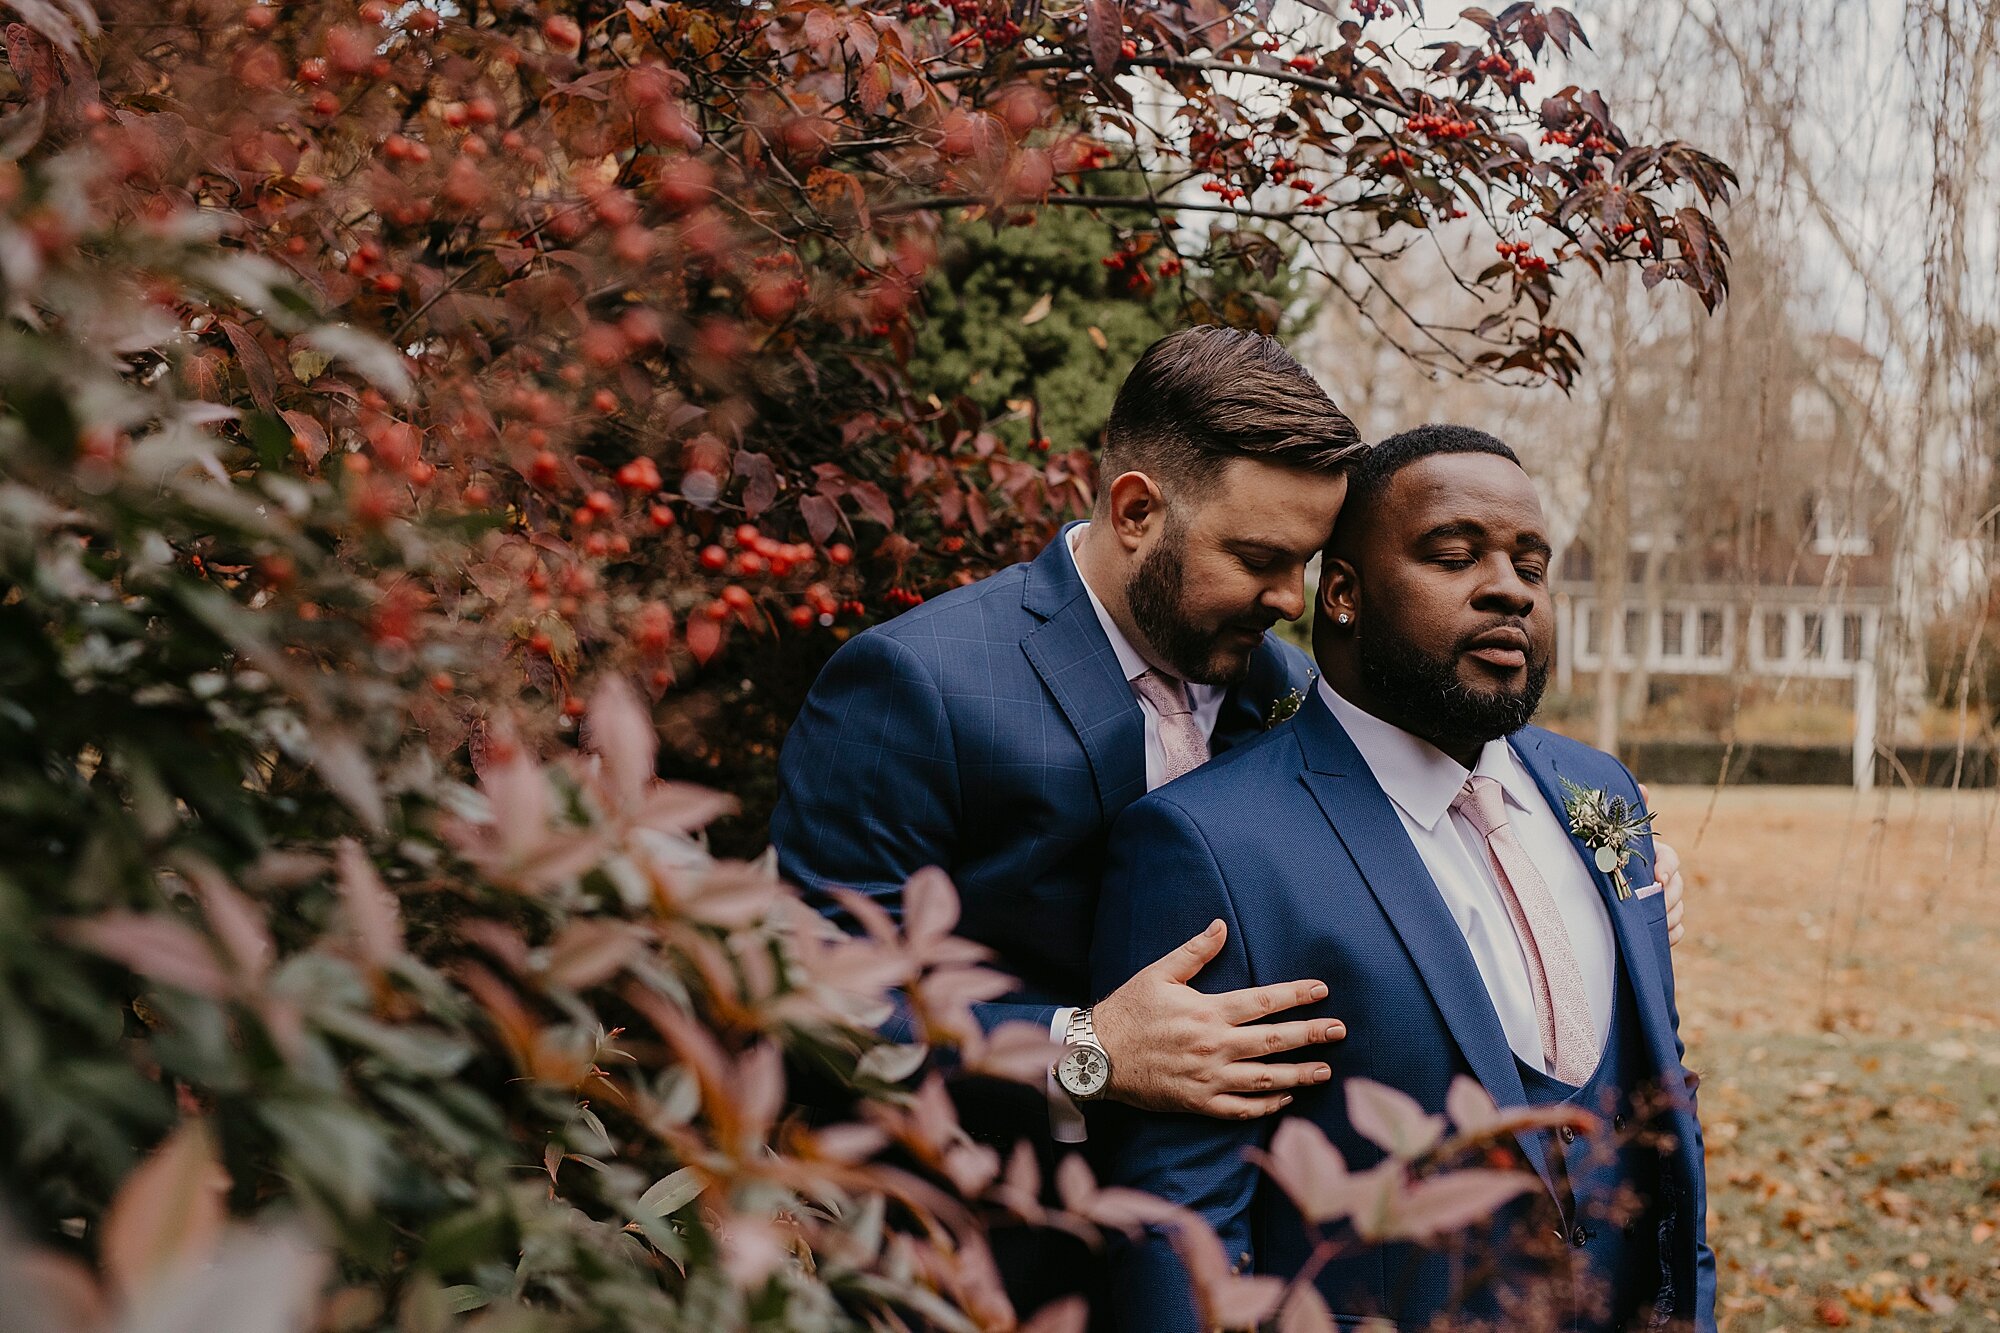 Love_by_Joe_mac_Levering_Mill_Tribute_House_Bala Cynwyd_Gay_LGBT_Wedding_Photography_Philadelphia__0057.jpg